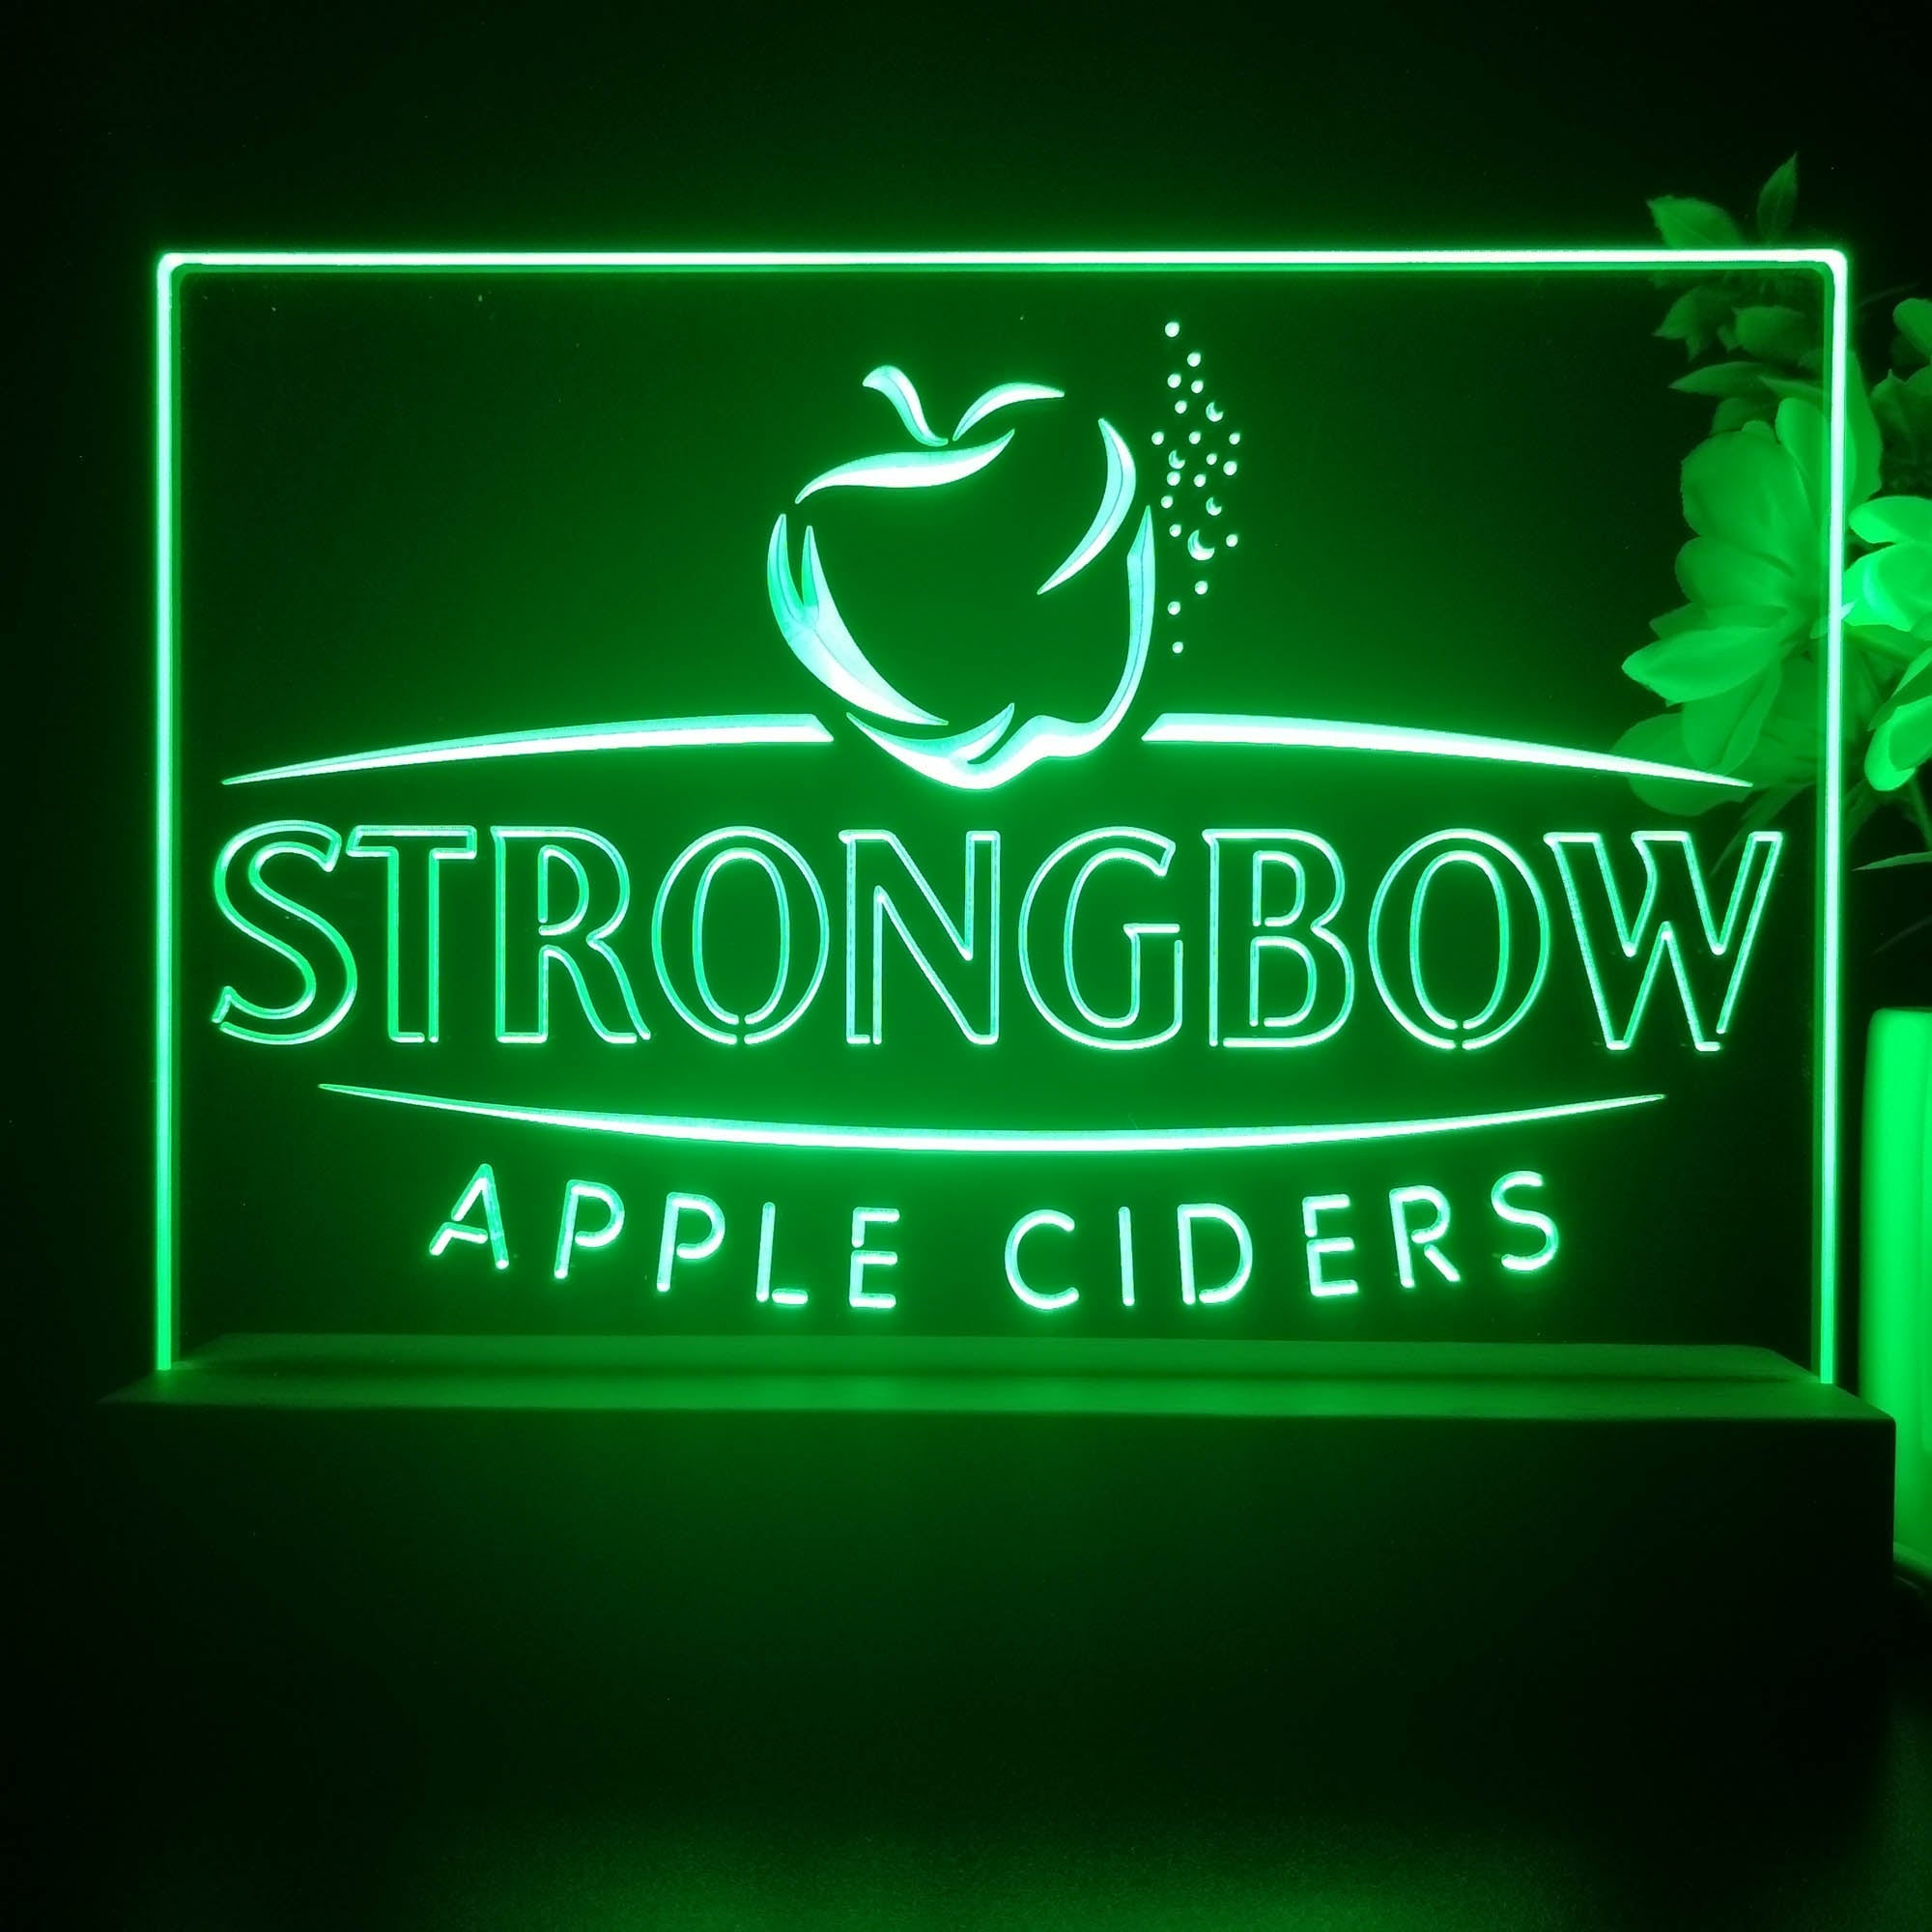 Strongbow Apple Ciders Neon Sign Pub Bar Decor Lamp